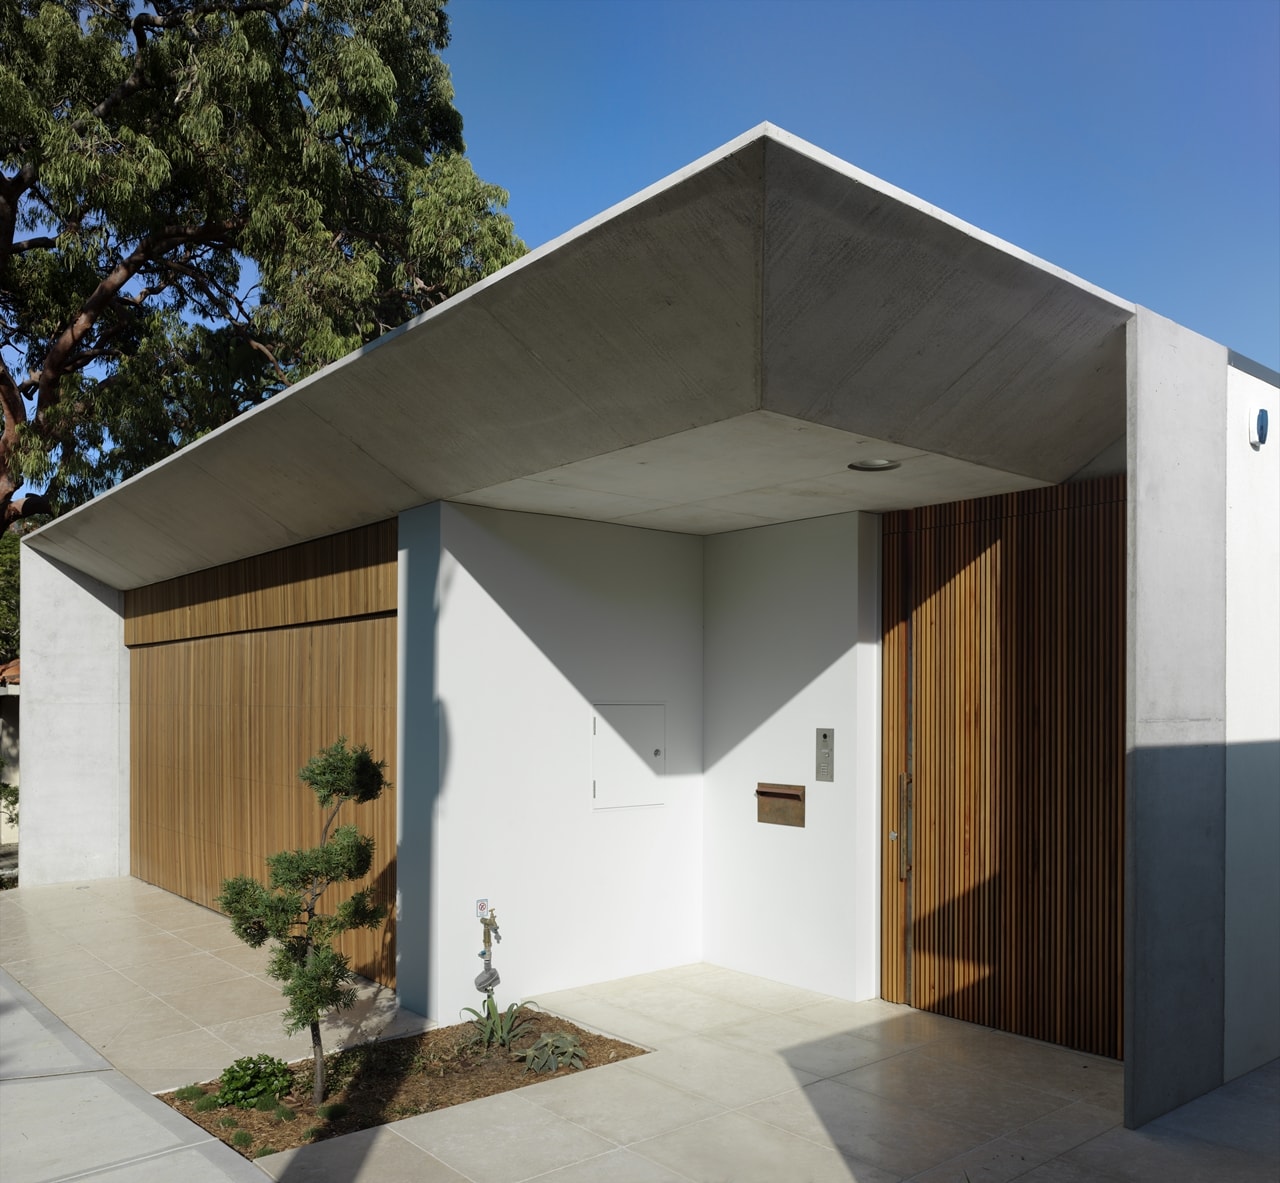 House entrance and garage entrance of the hillside house designed by Rolf Ockert